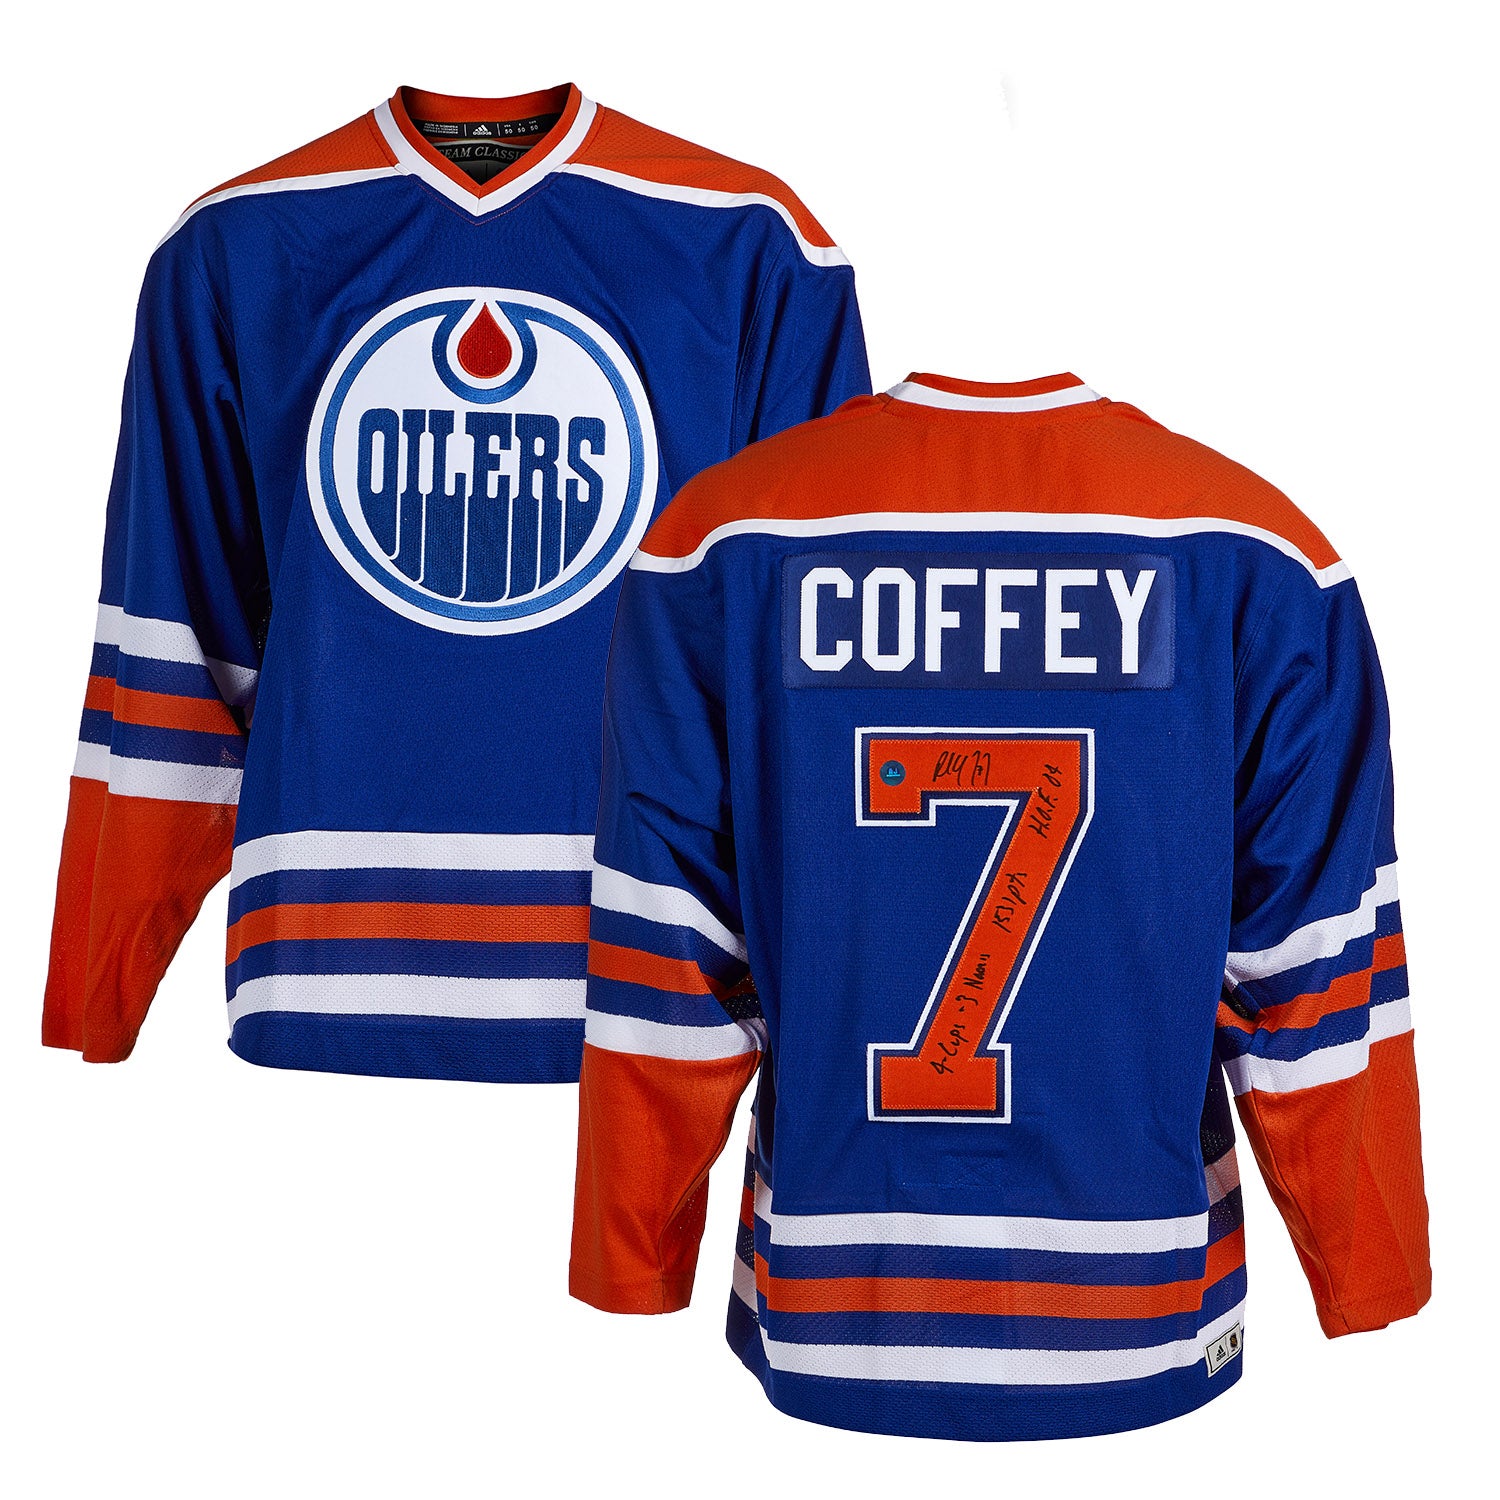 Paul Coffey Edmonton Oilers Signed Career Stats Classic Vintage Jersey